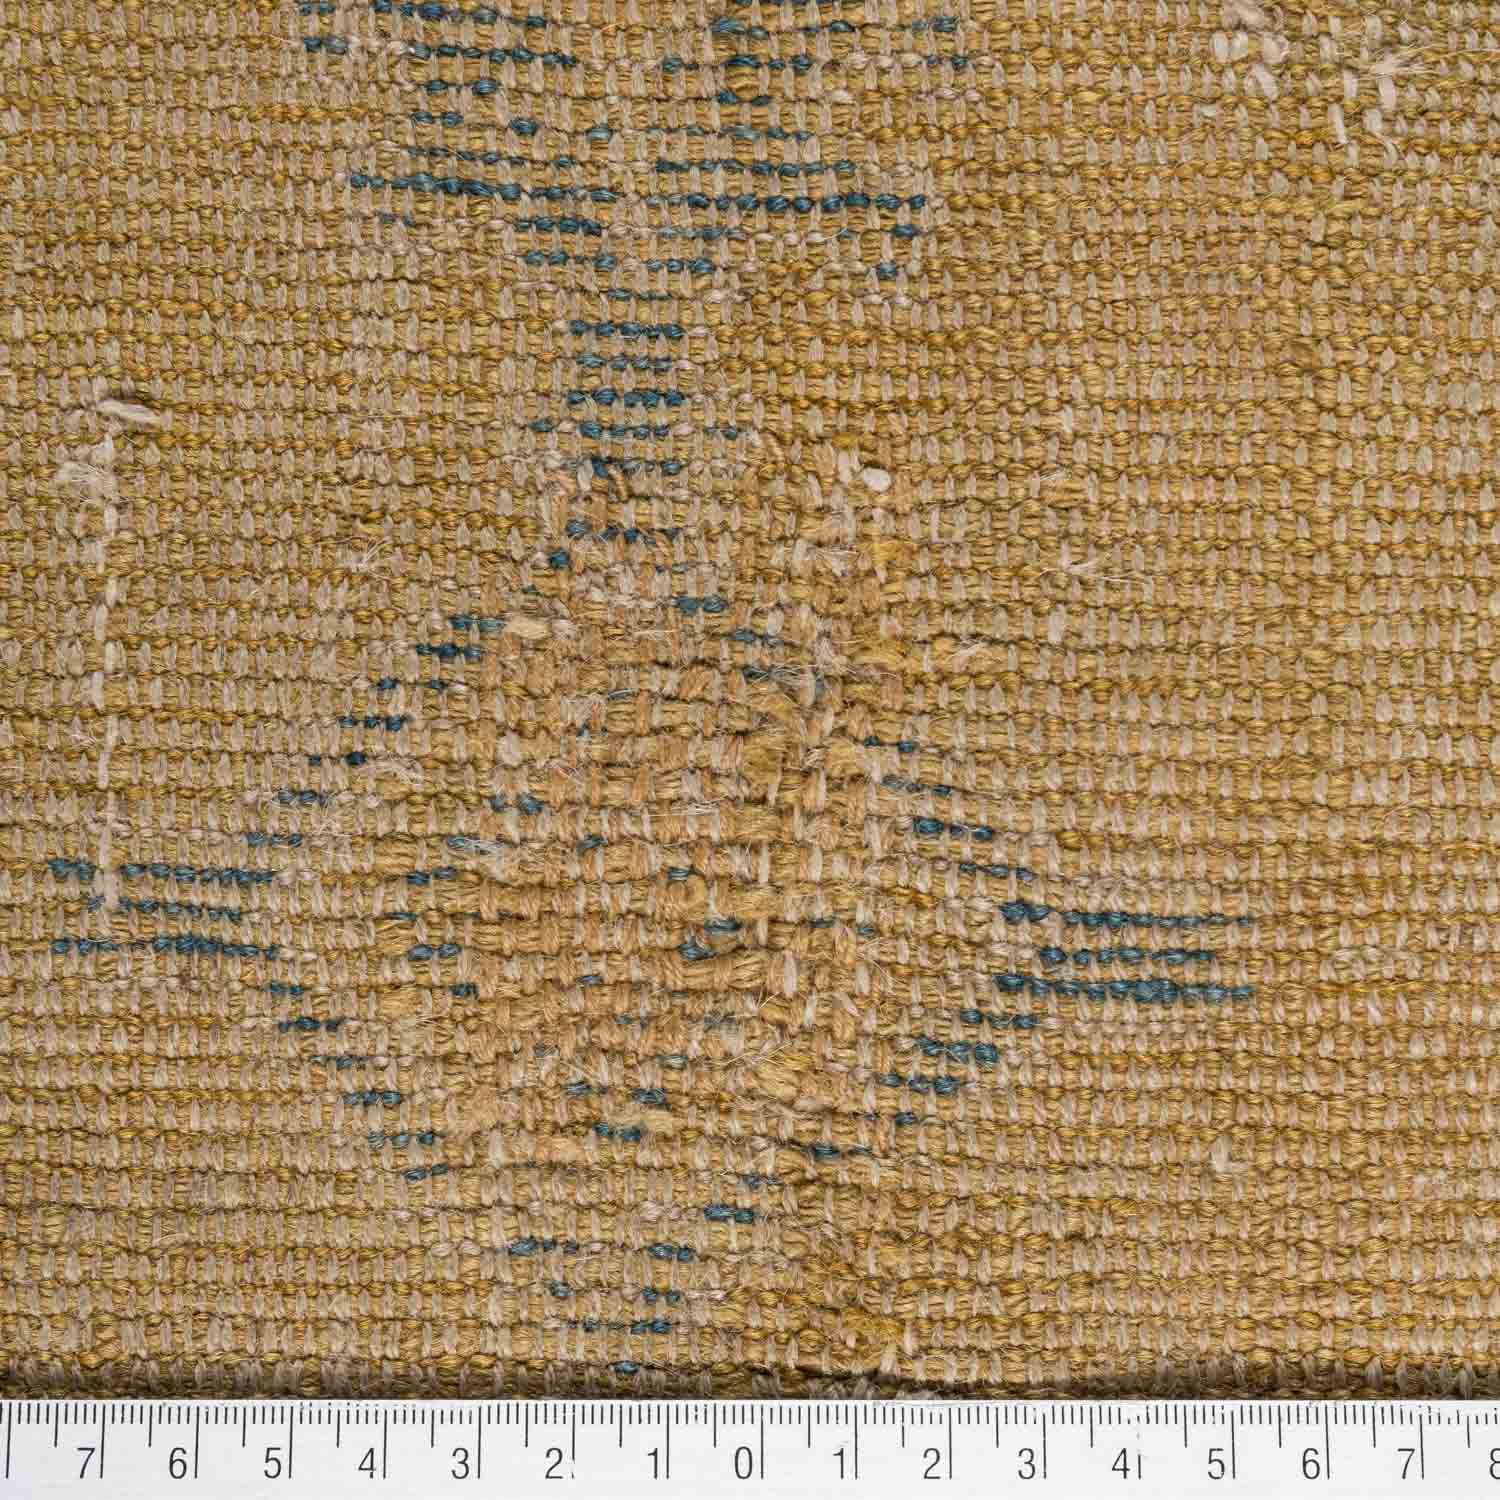 Musealer Knüpfteppich aus Wolle. CUENCA/SÜD SPANIEN, 17. Jh., ca. 317x208 cm. - Image 6 of 6